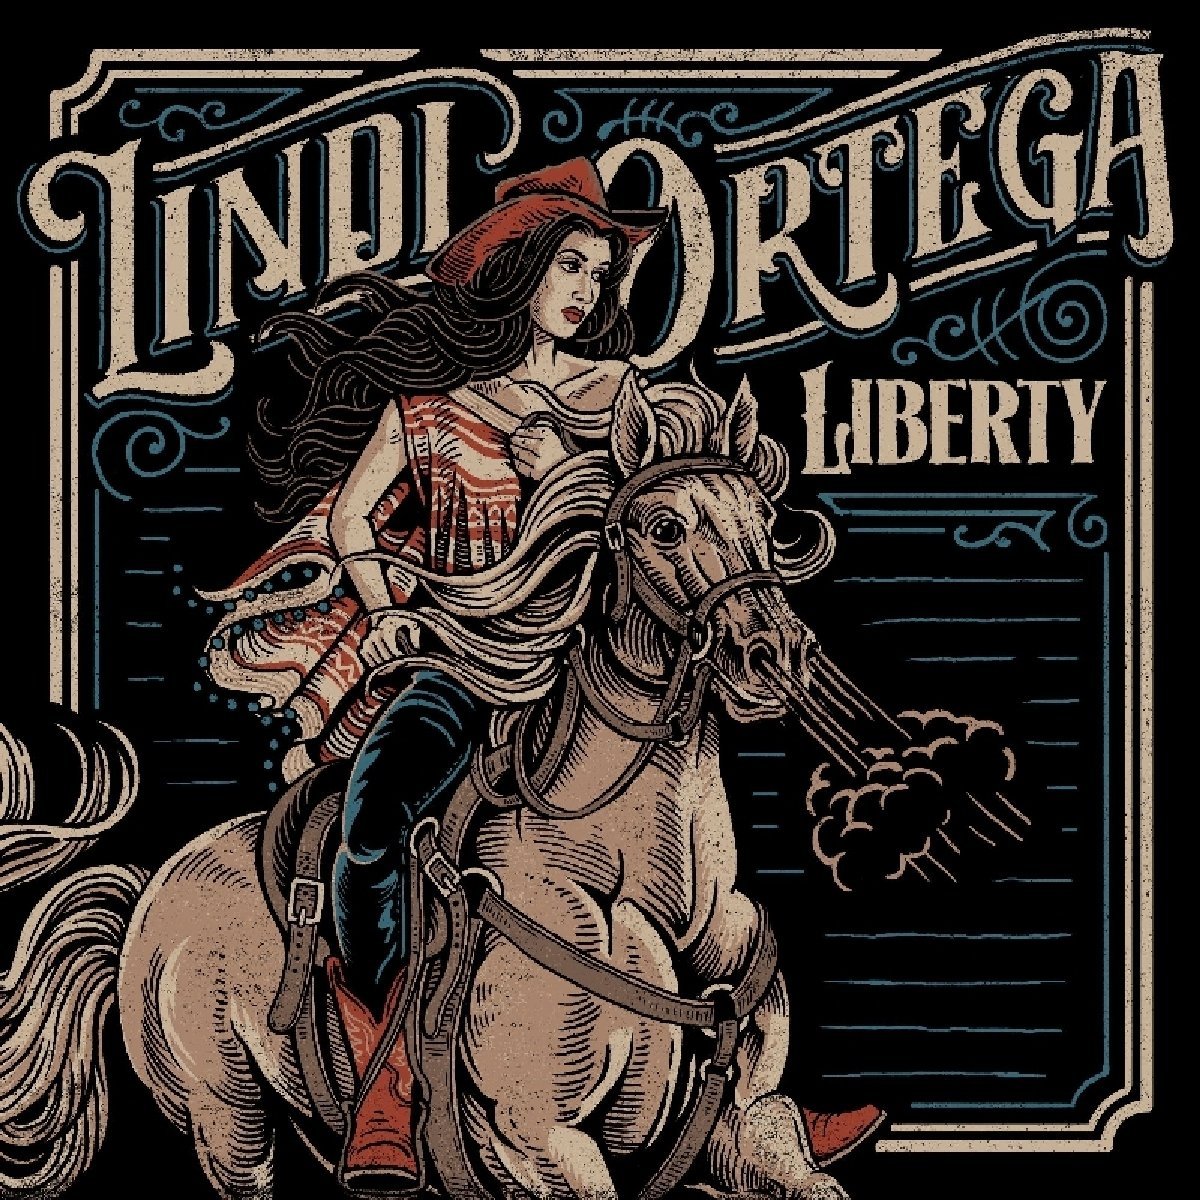 Lindi Ortega: Liberty